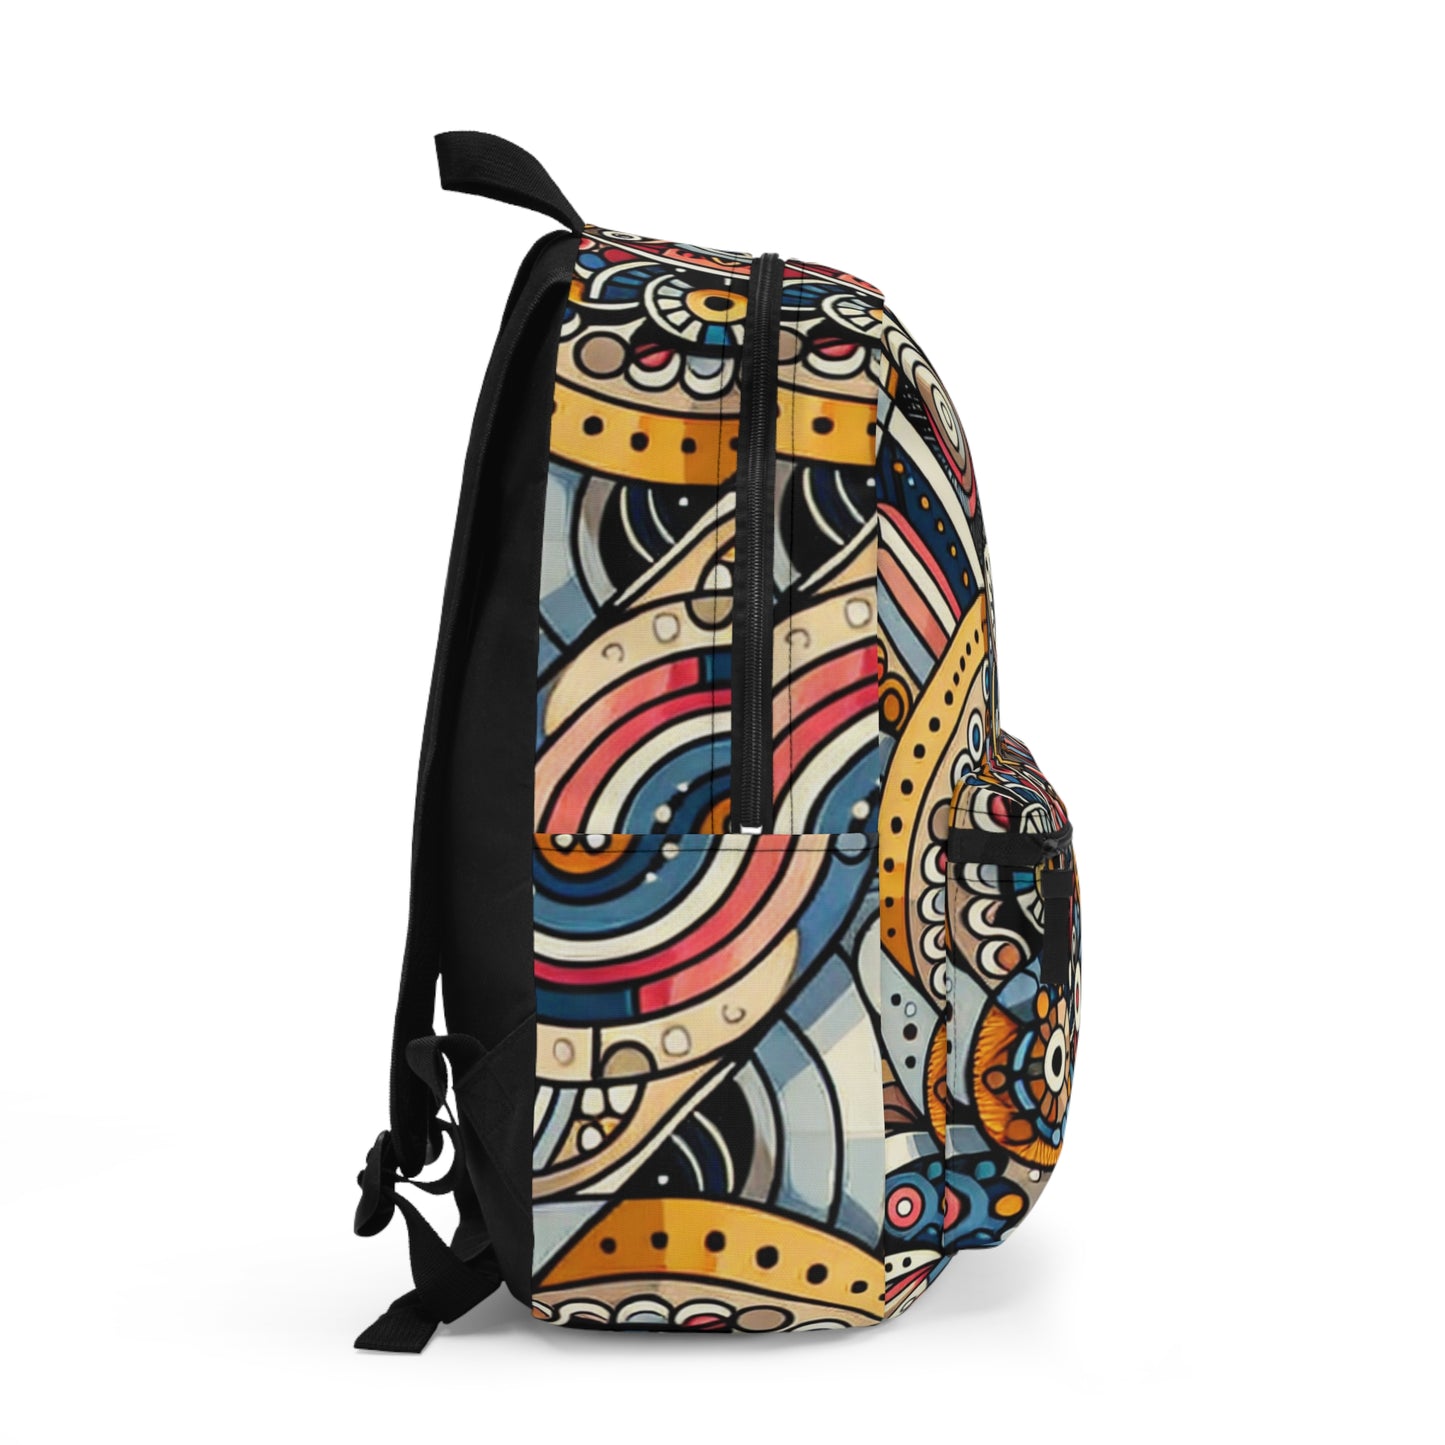 "Moroccan Mosaic Masterpiece" - The Alien Backpack Pattern Art